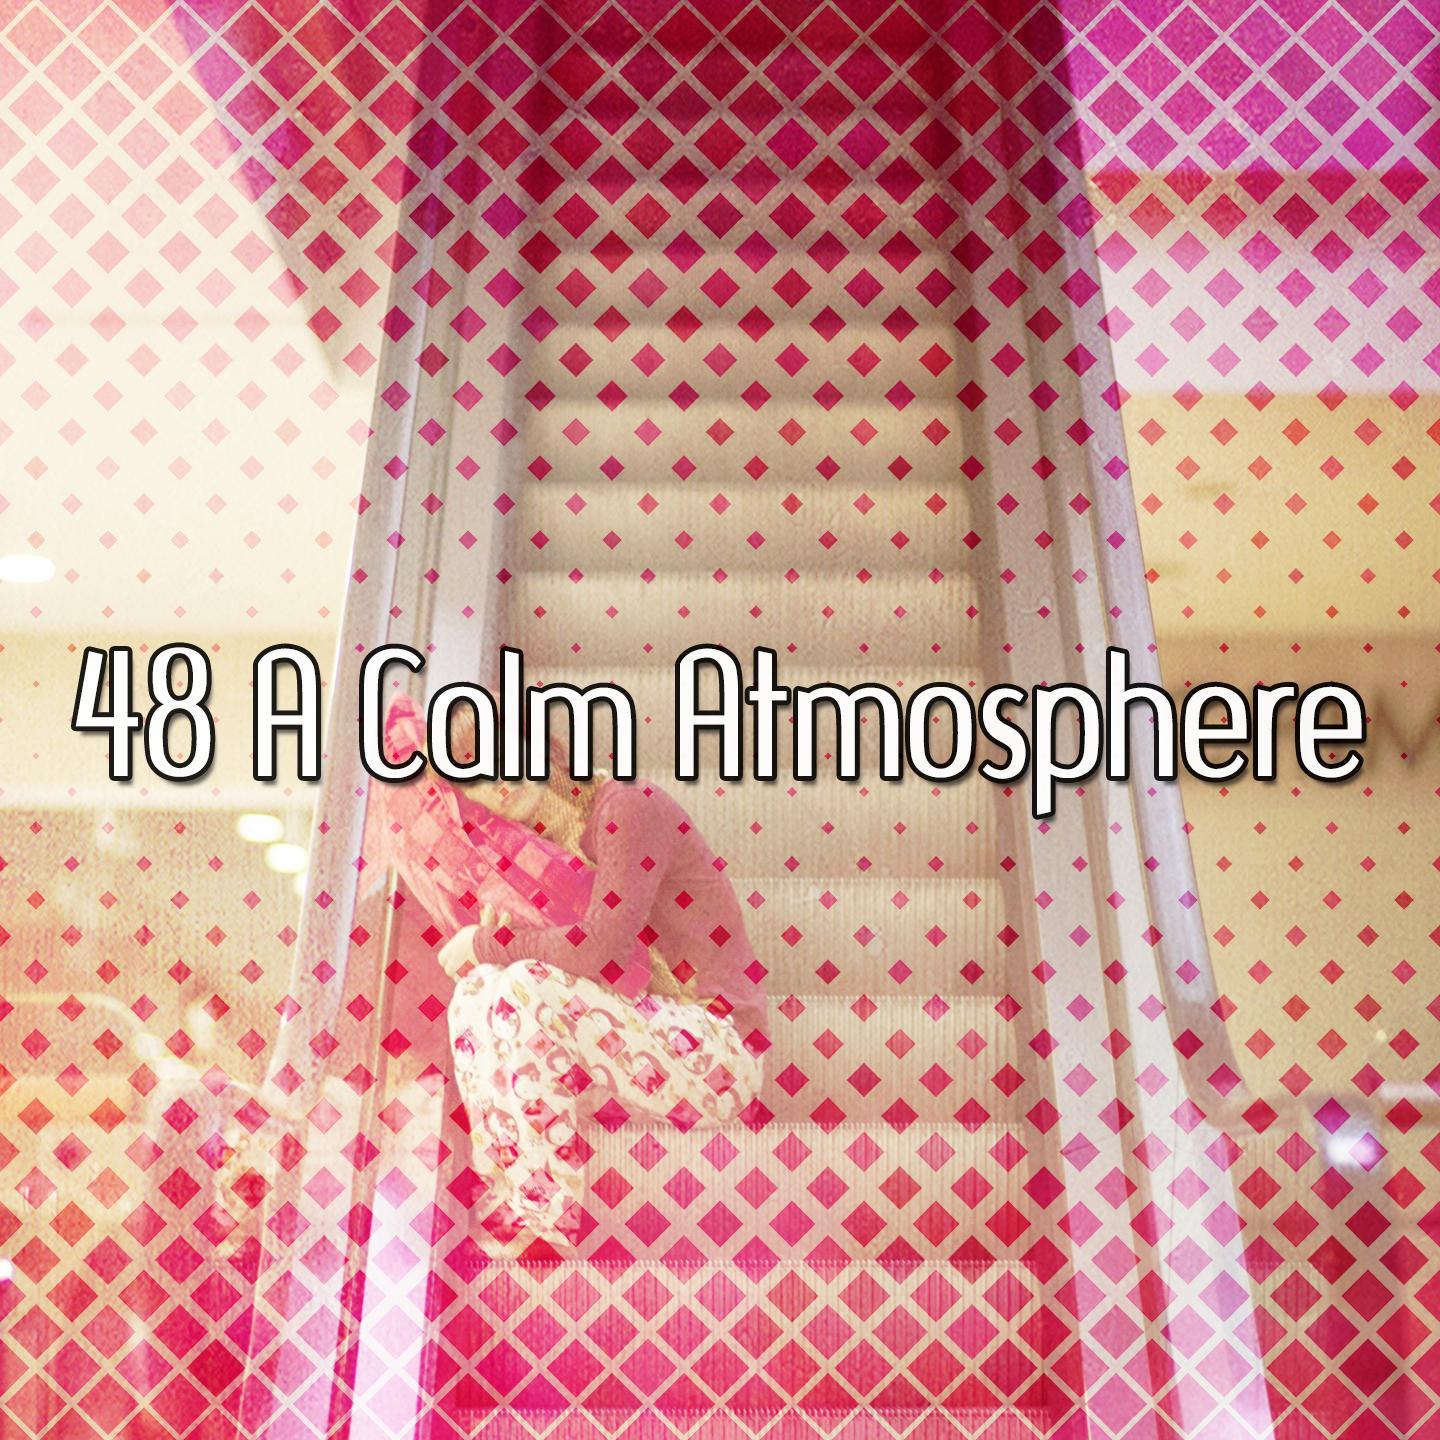 48 A Calm Atmosphere